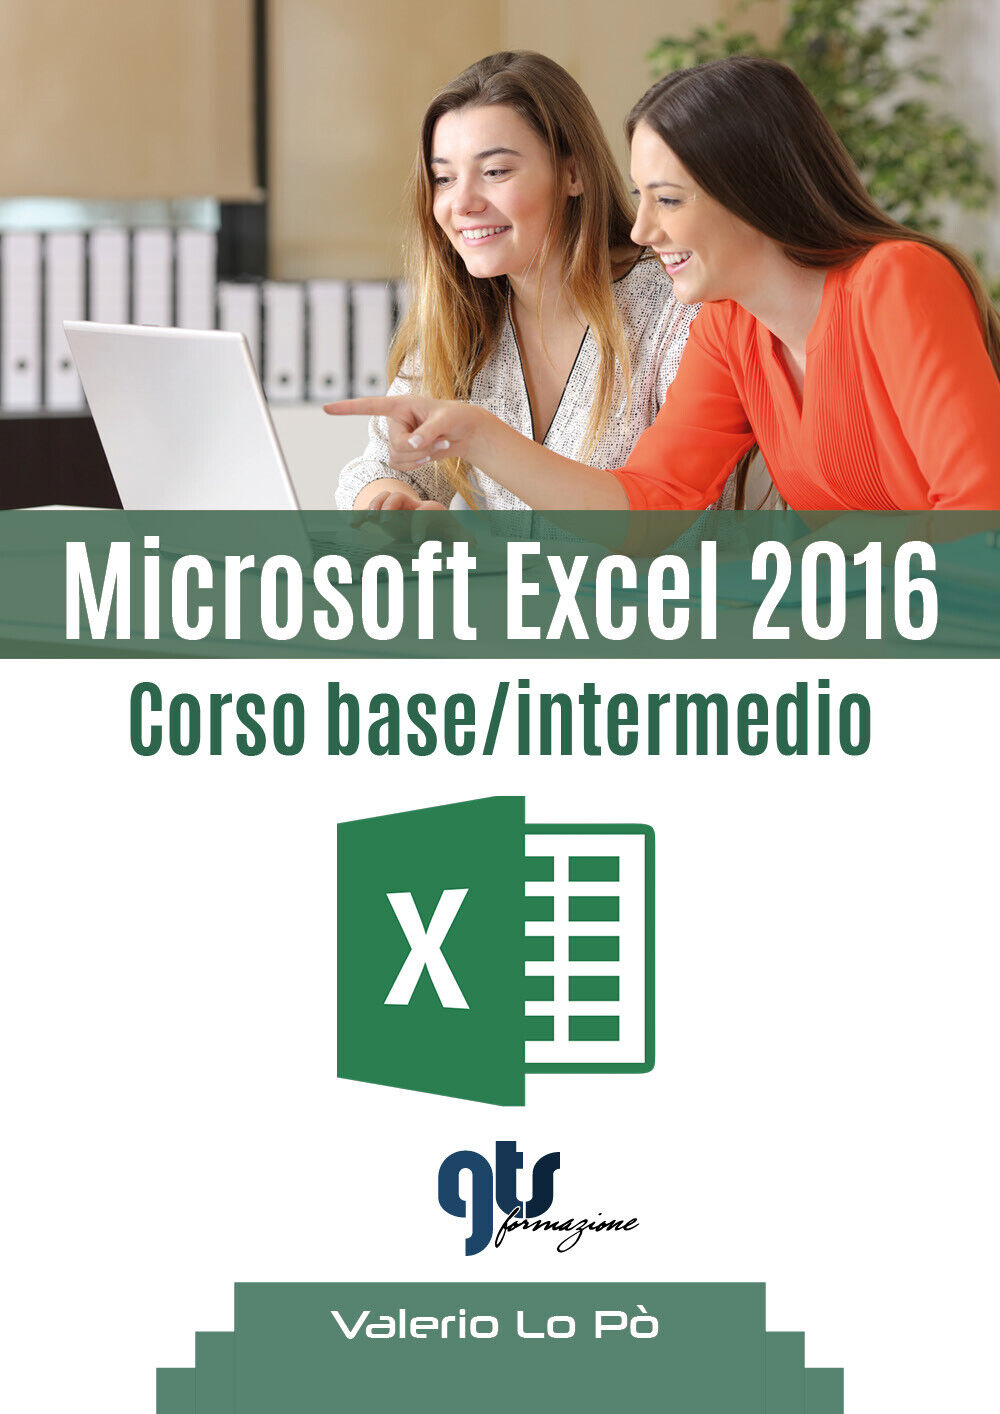 Microsoft Excel 2016 - Corso base/intermedio,Valerio Lo P?,  2019,  Youcanprint libro usato